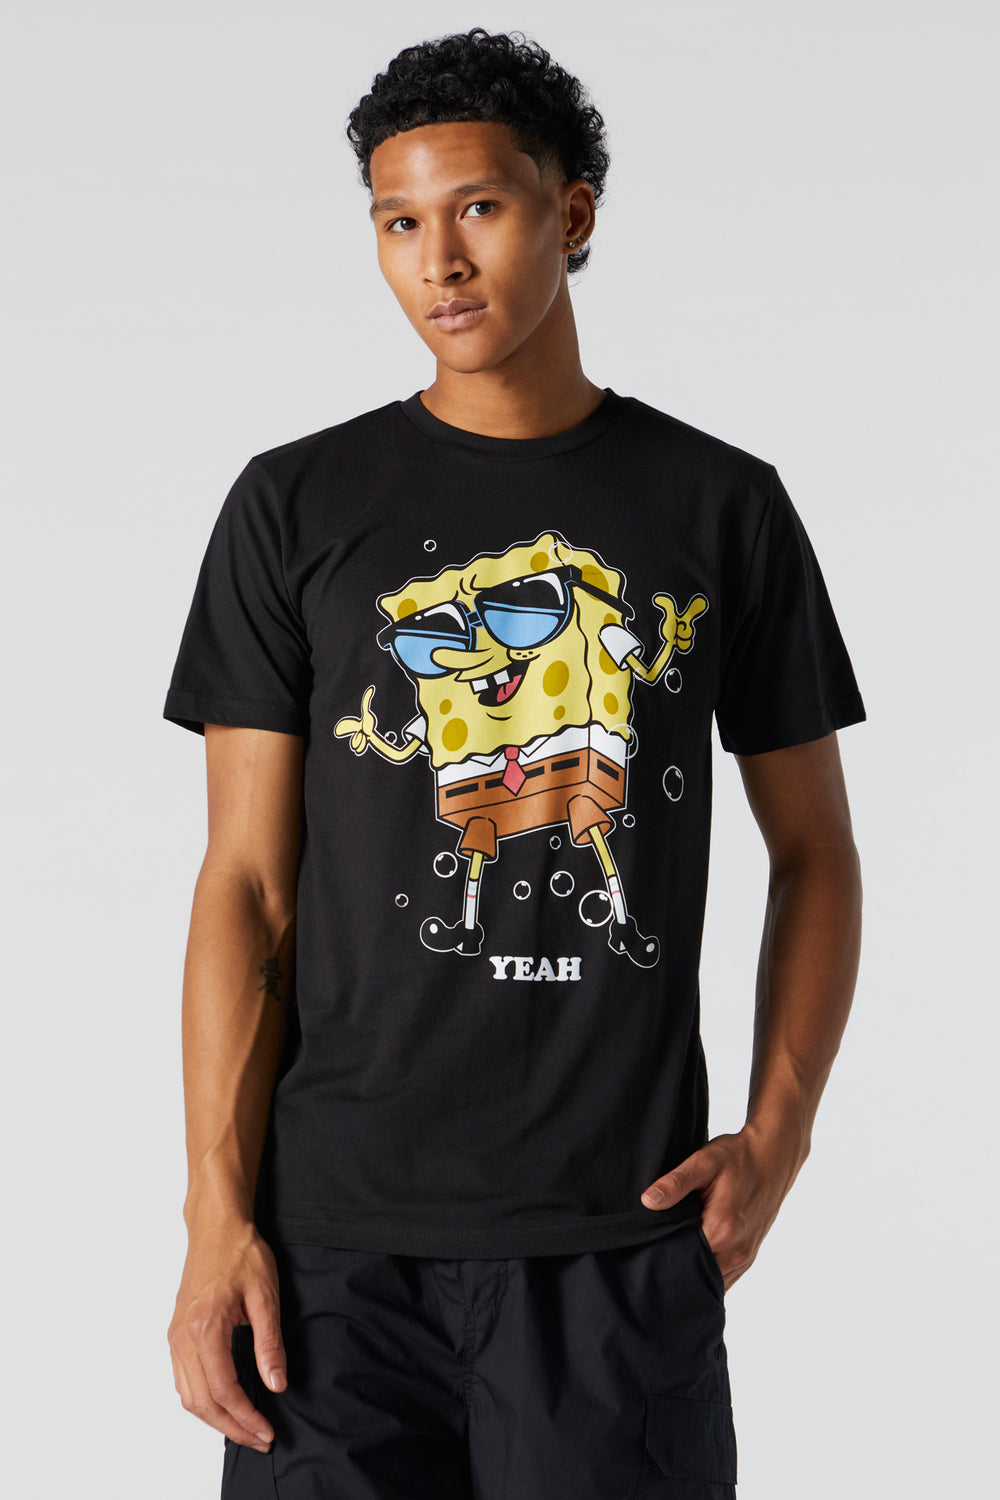 Yeah SpongeBob Graphic T-Shirt Yeah SpongeBob Graphic T-Shirt 1